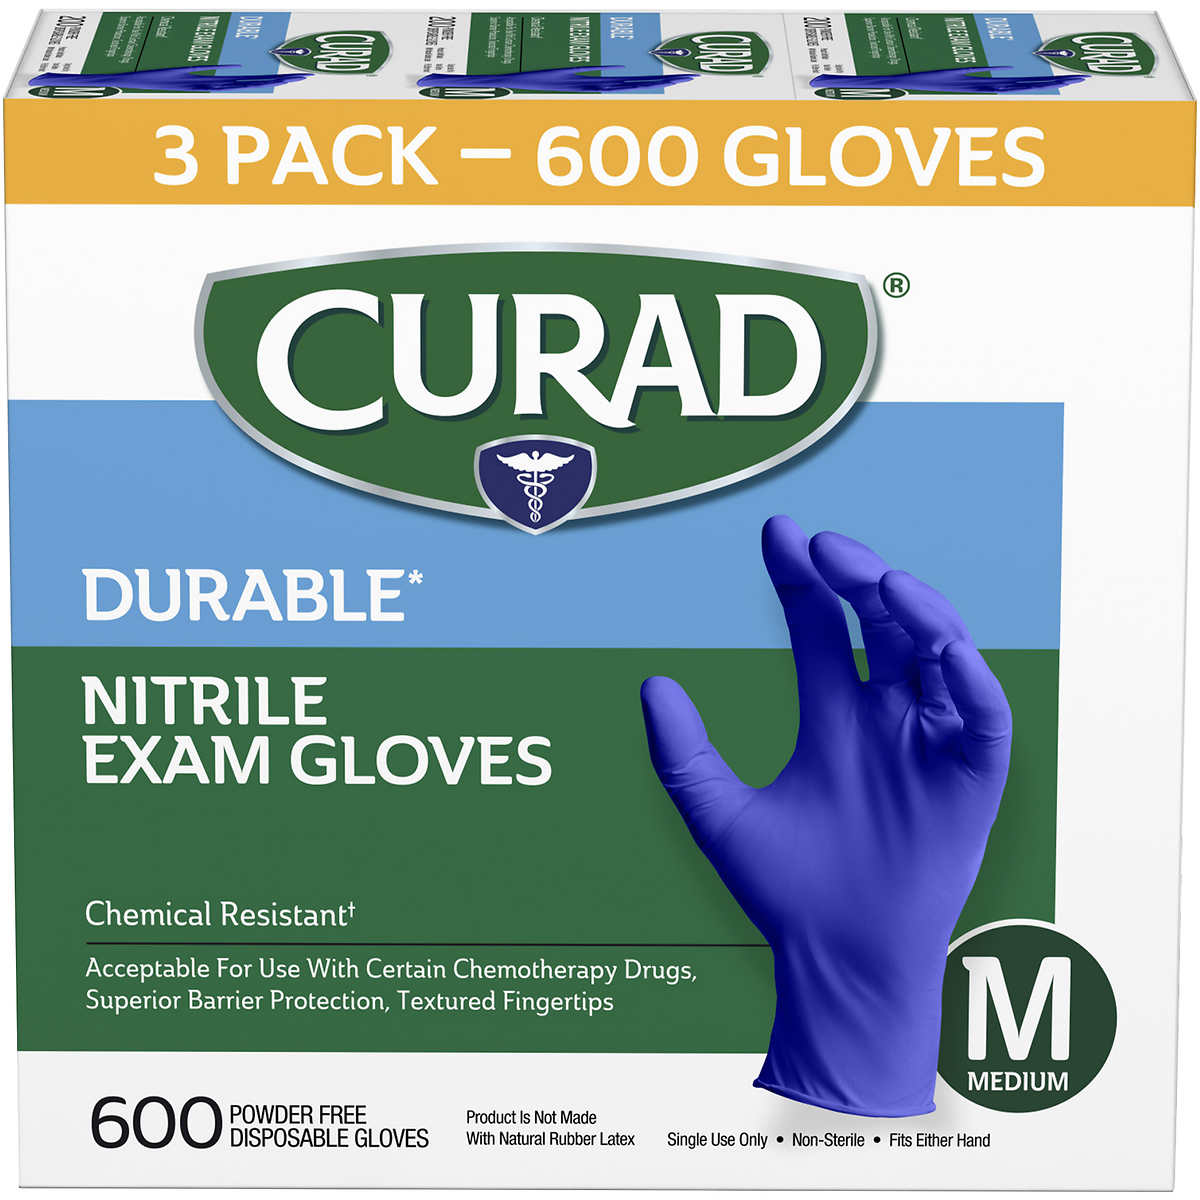 Curad Durable Nitrile Exam Gloves Medium FREE SHIPPING 600 Count 